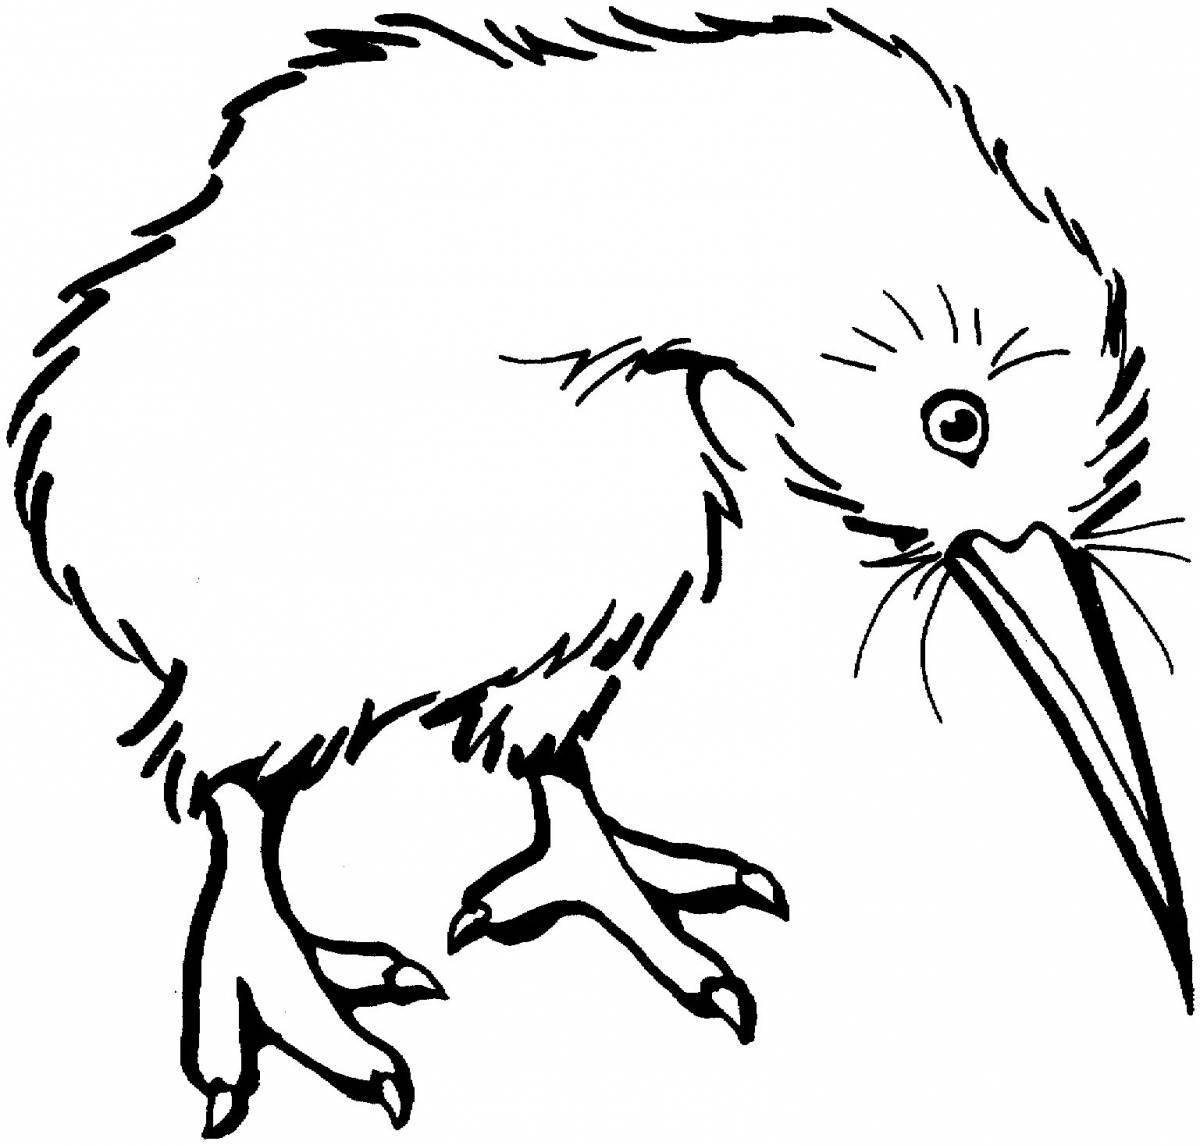 Kiwi bird #2